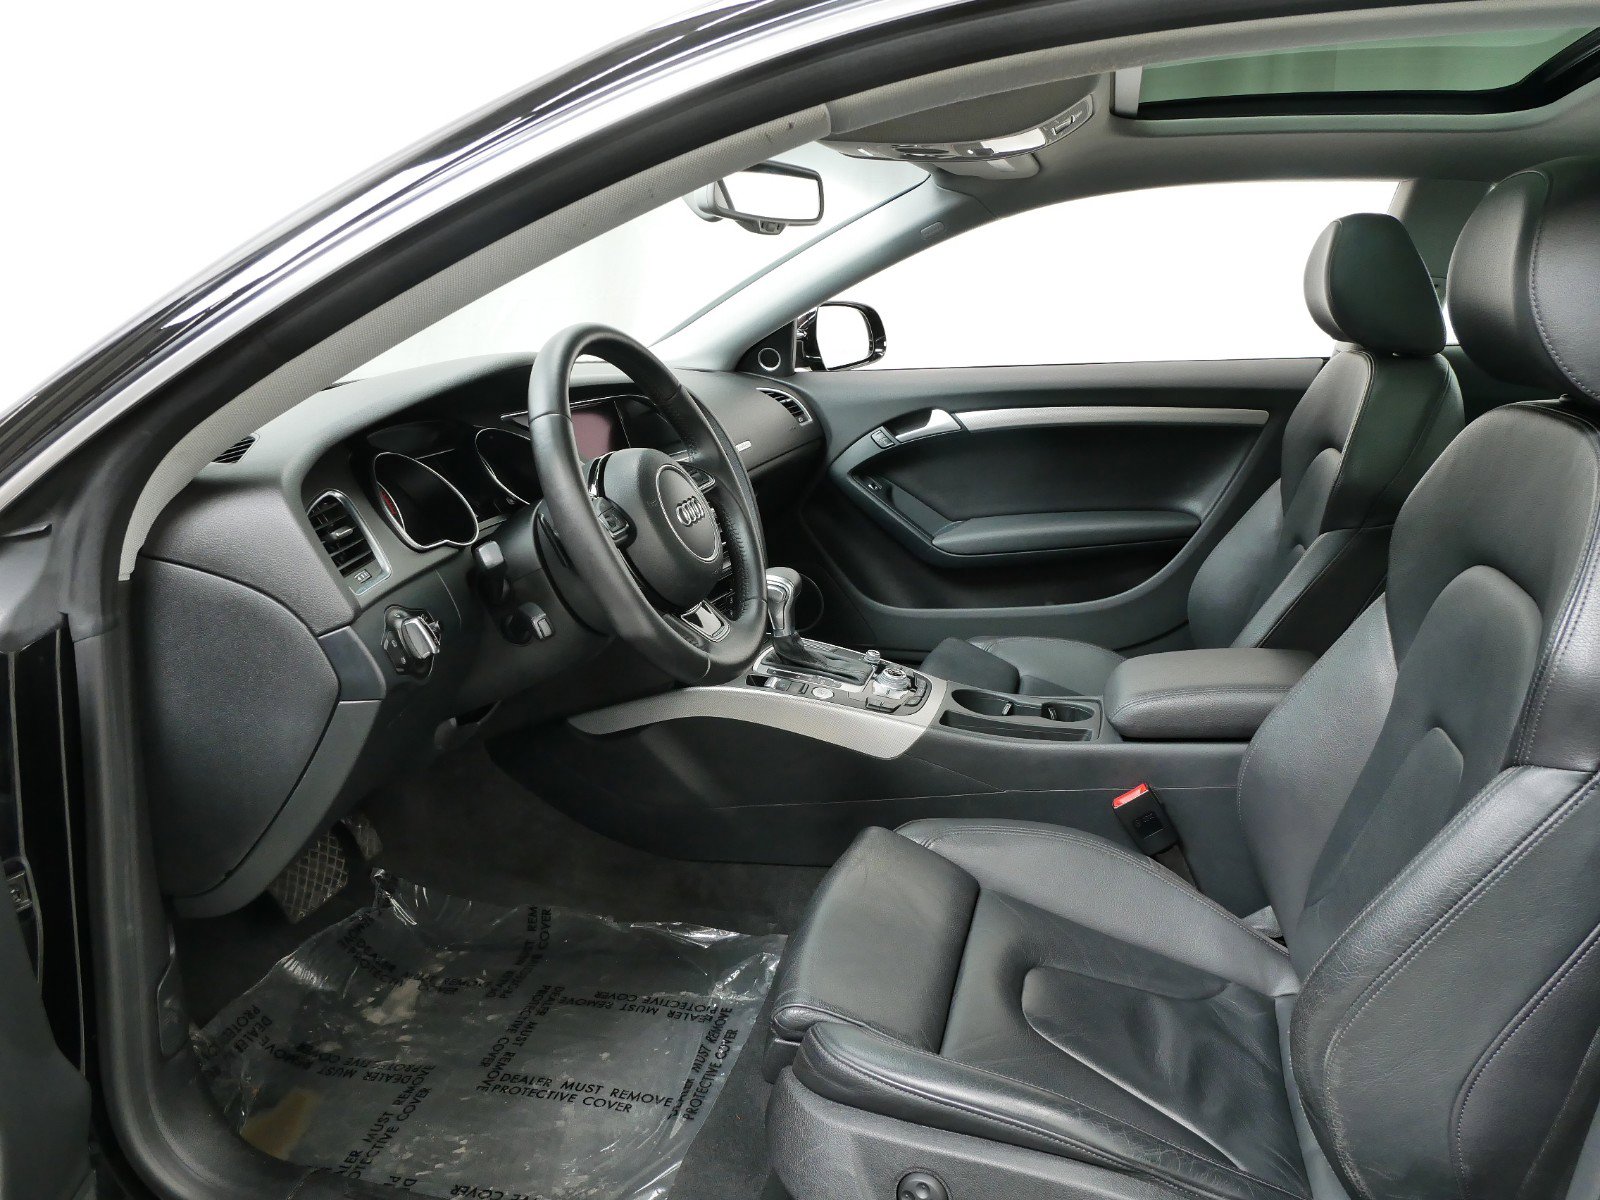 Used 2015 Audi A5 Premium Plus with VIN WAUMFAFR1FA008264 for sale in Minneapolis, Minnesota